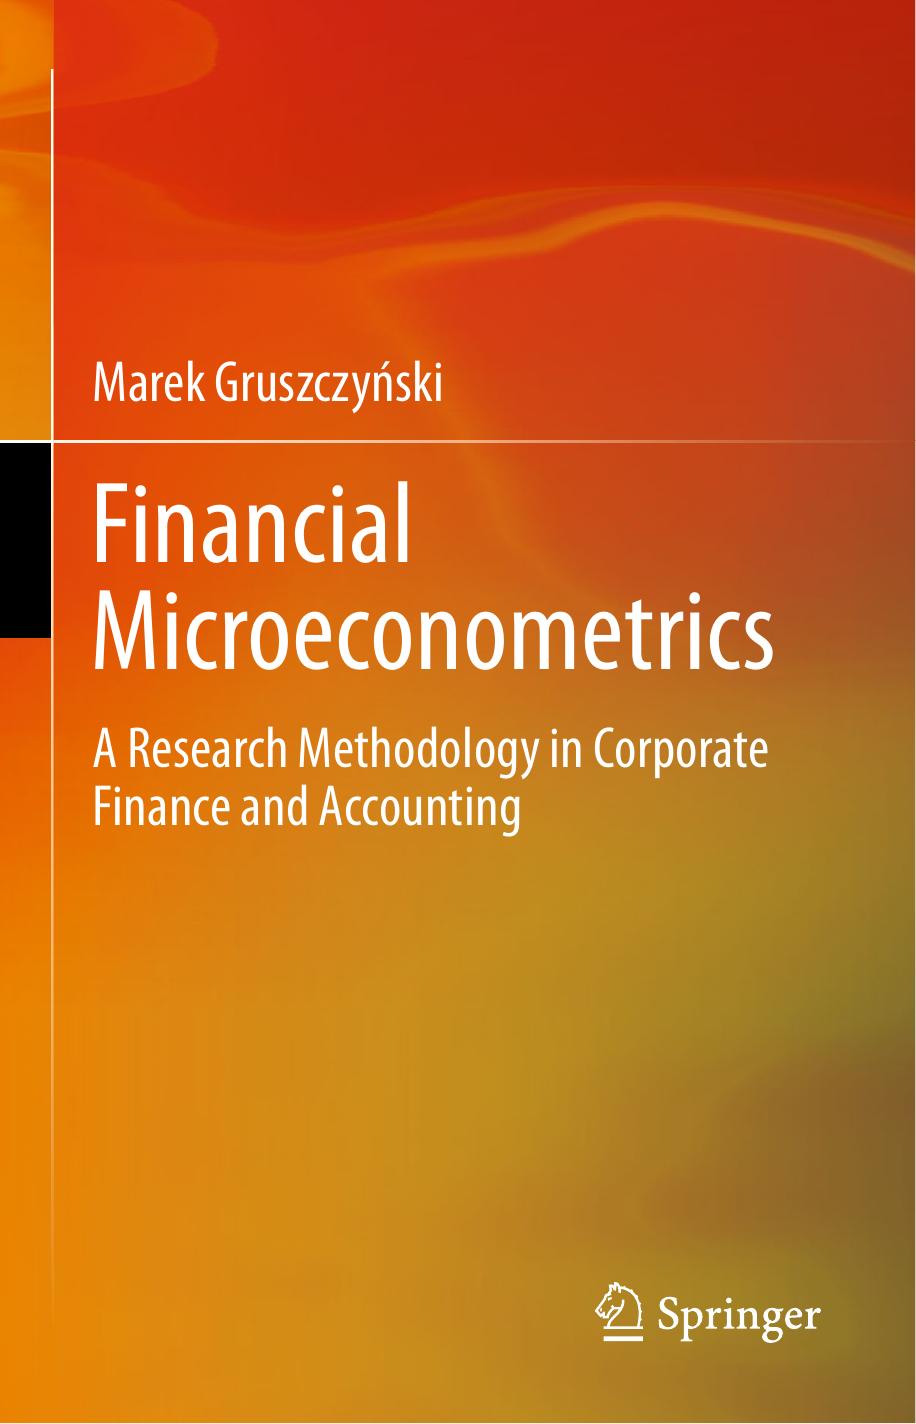 Financial Microeconometrics A Research Methodology in Corporate Finance and Accounting by Marek Gruszczyński 2020